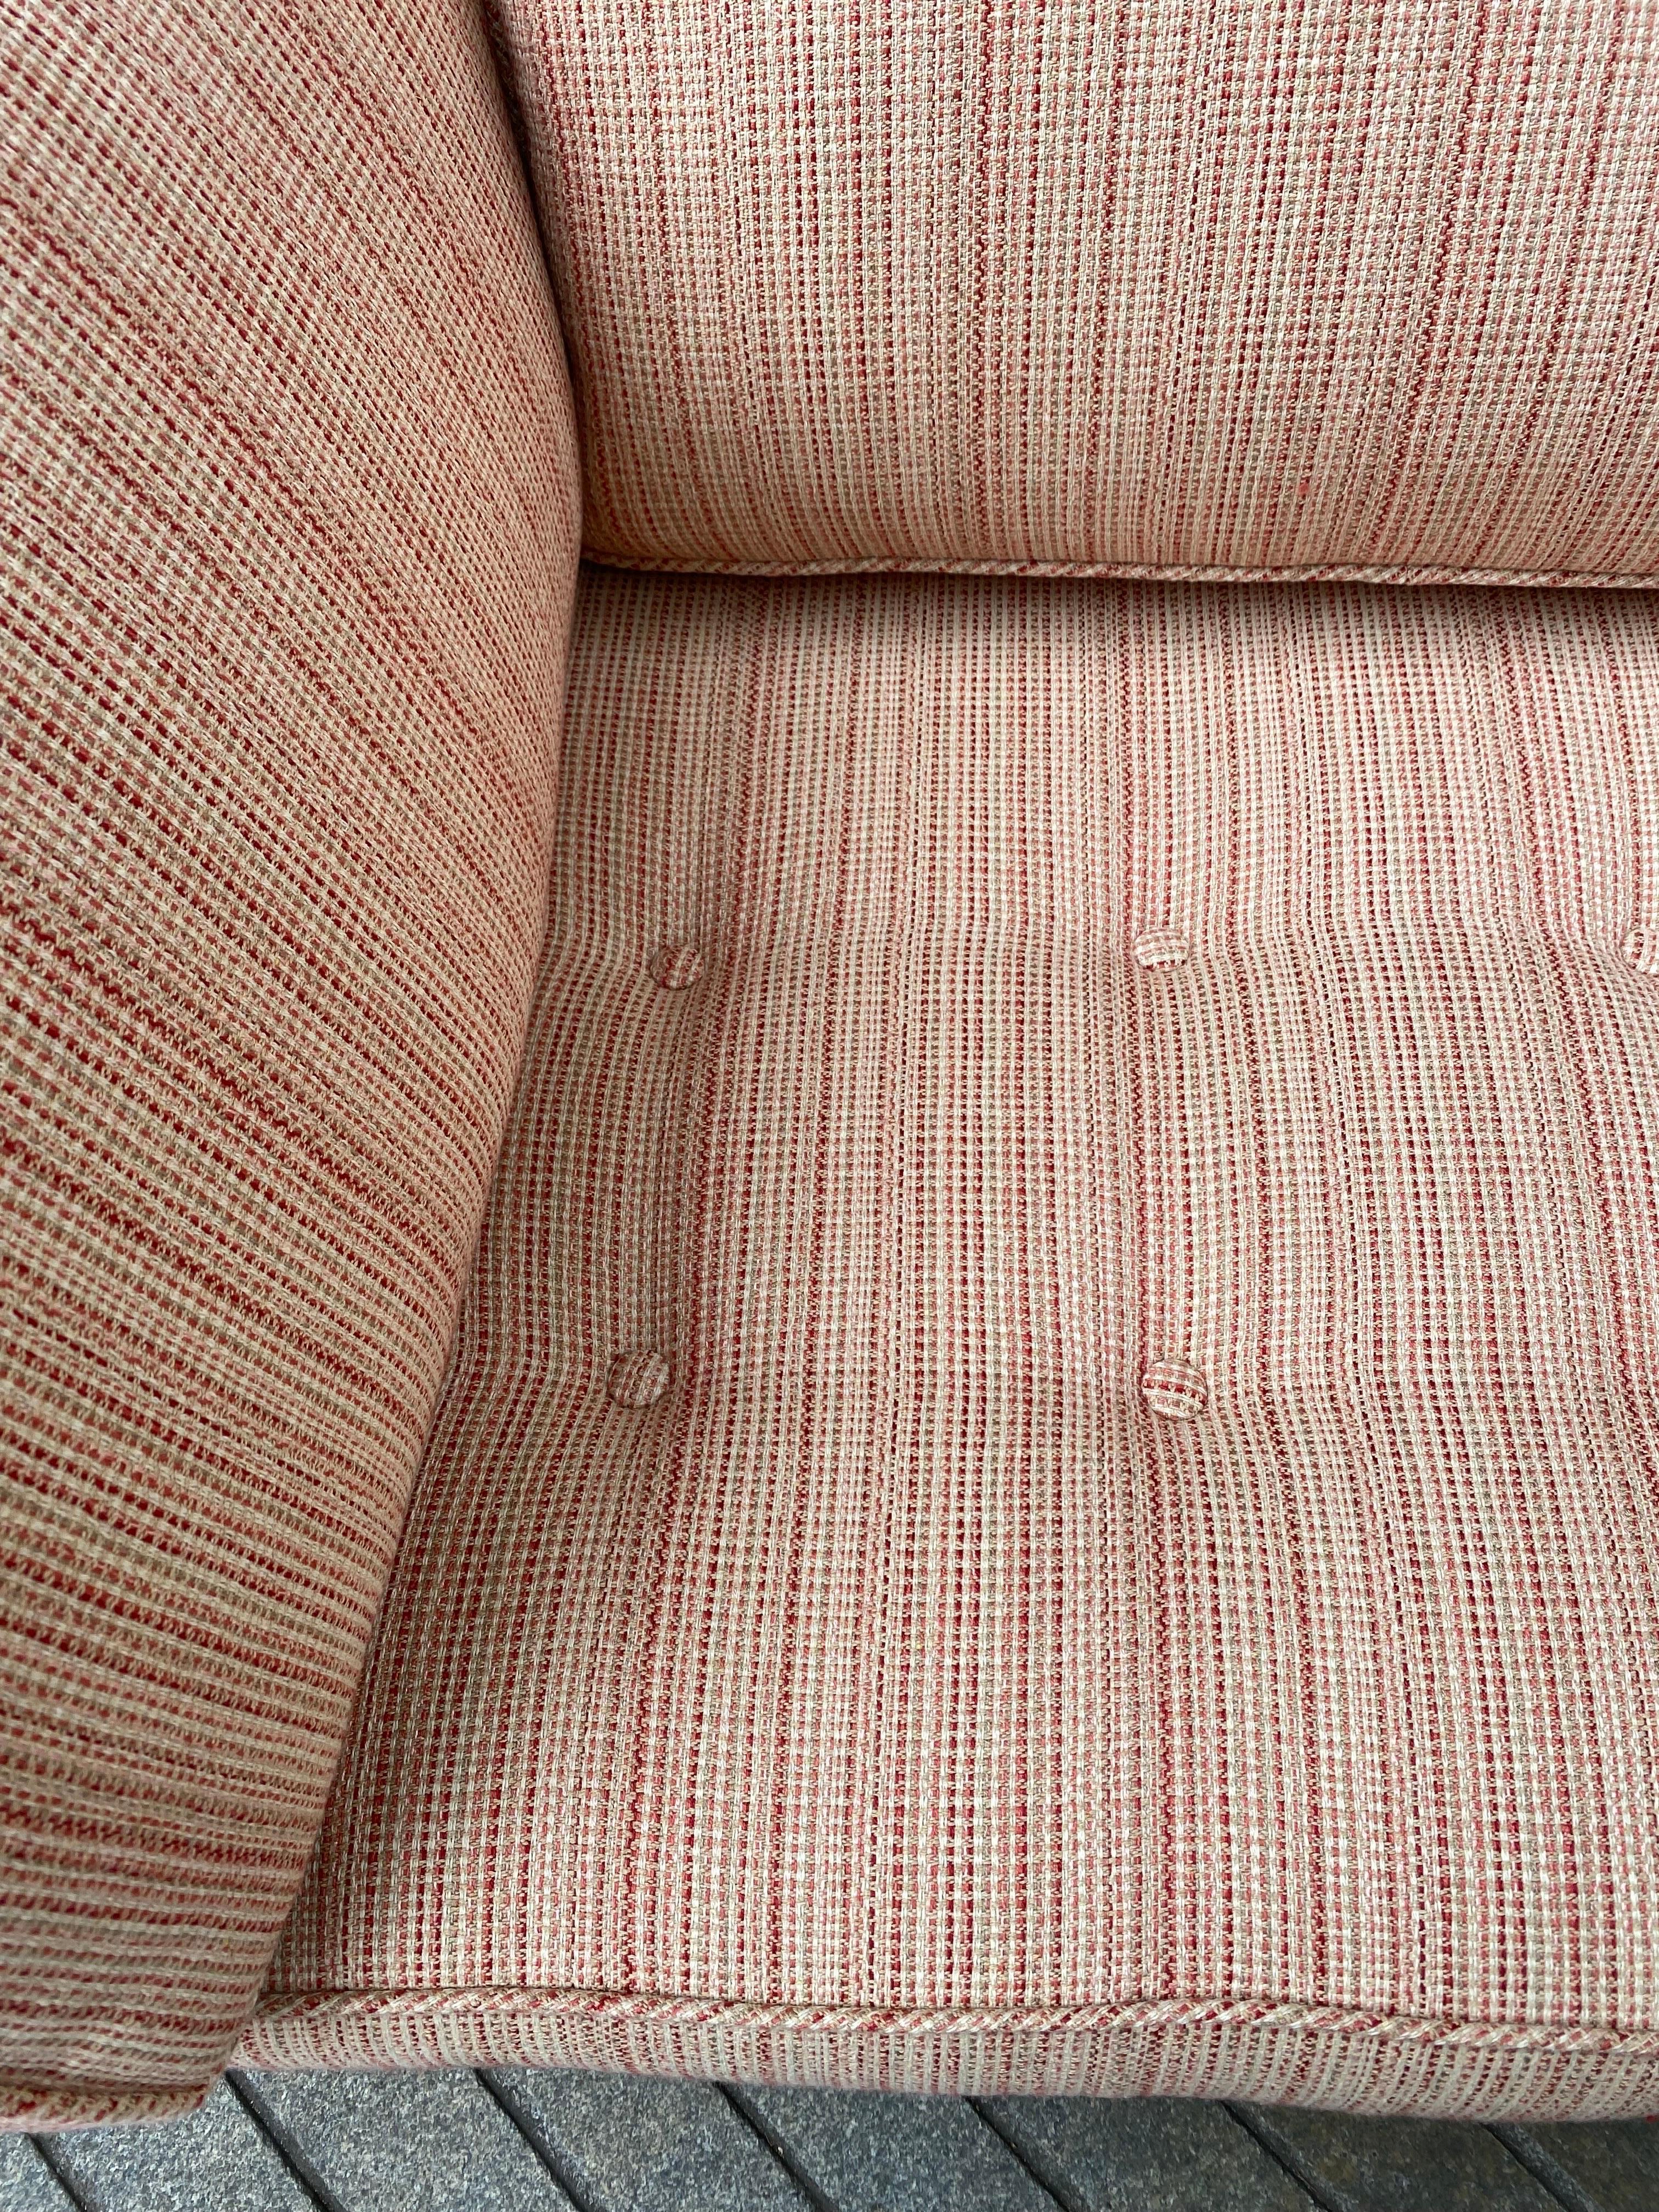 Upholstery Danish Angle Arm Upholstered Sofa For Sale